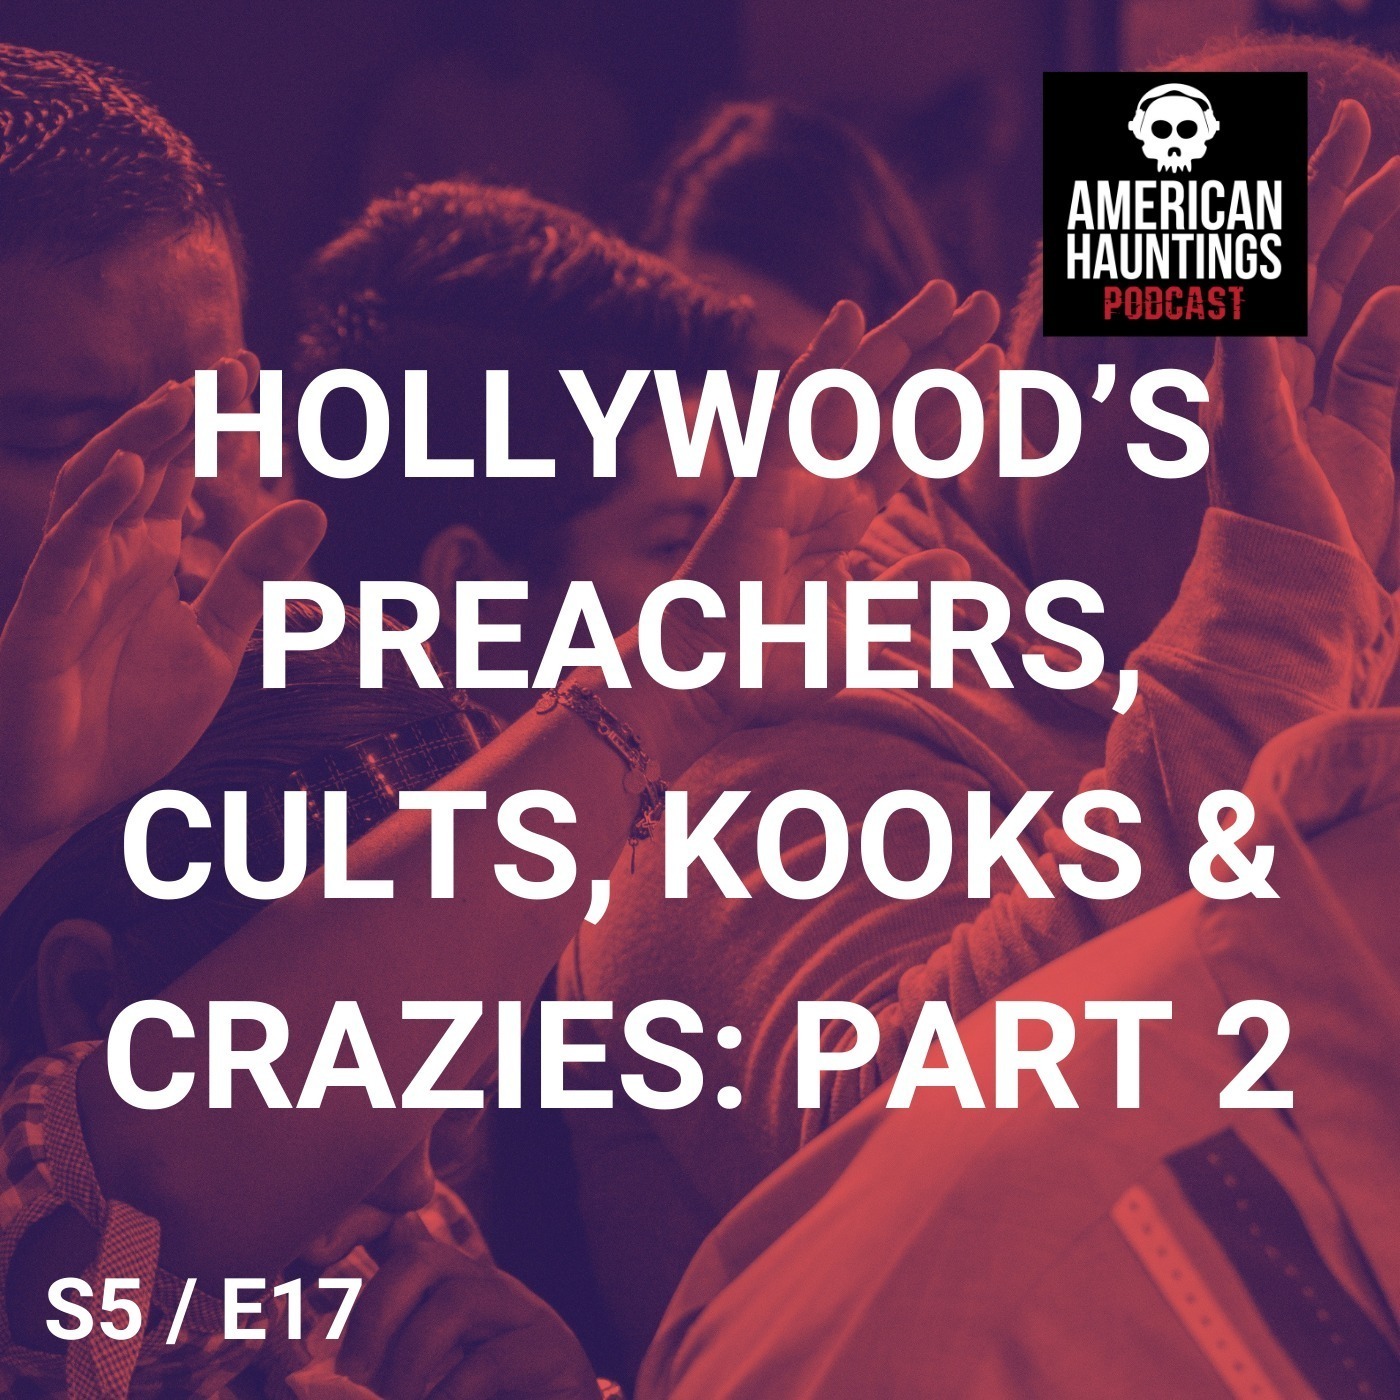 Hollywood's Preachers, Cults, Kooks & Crazies: Part 2